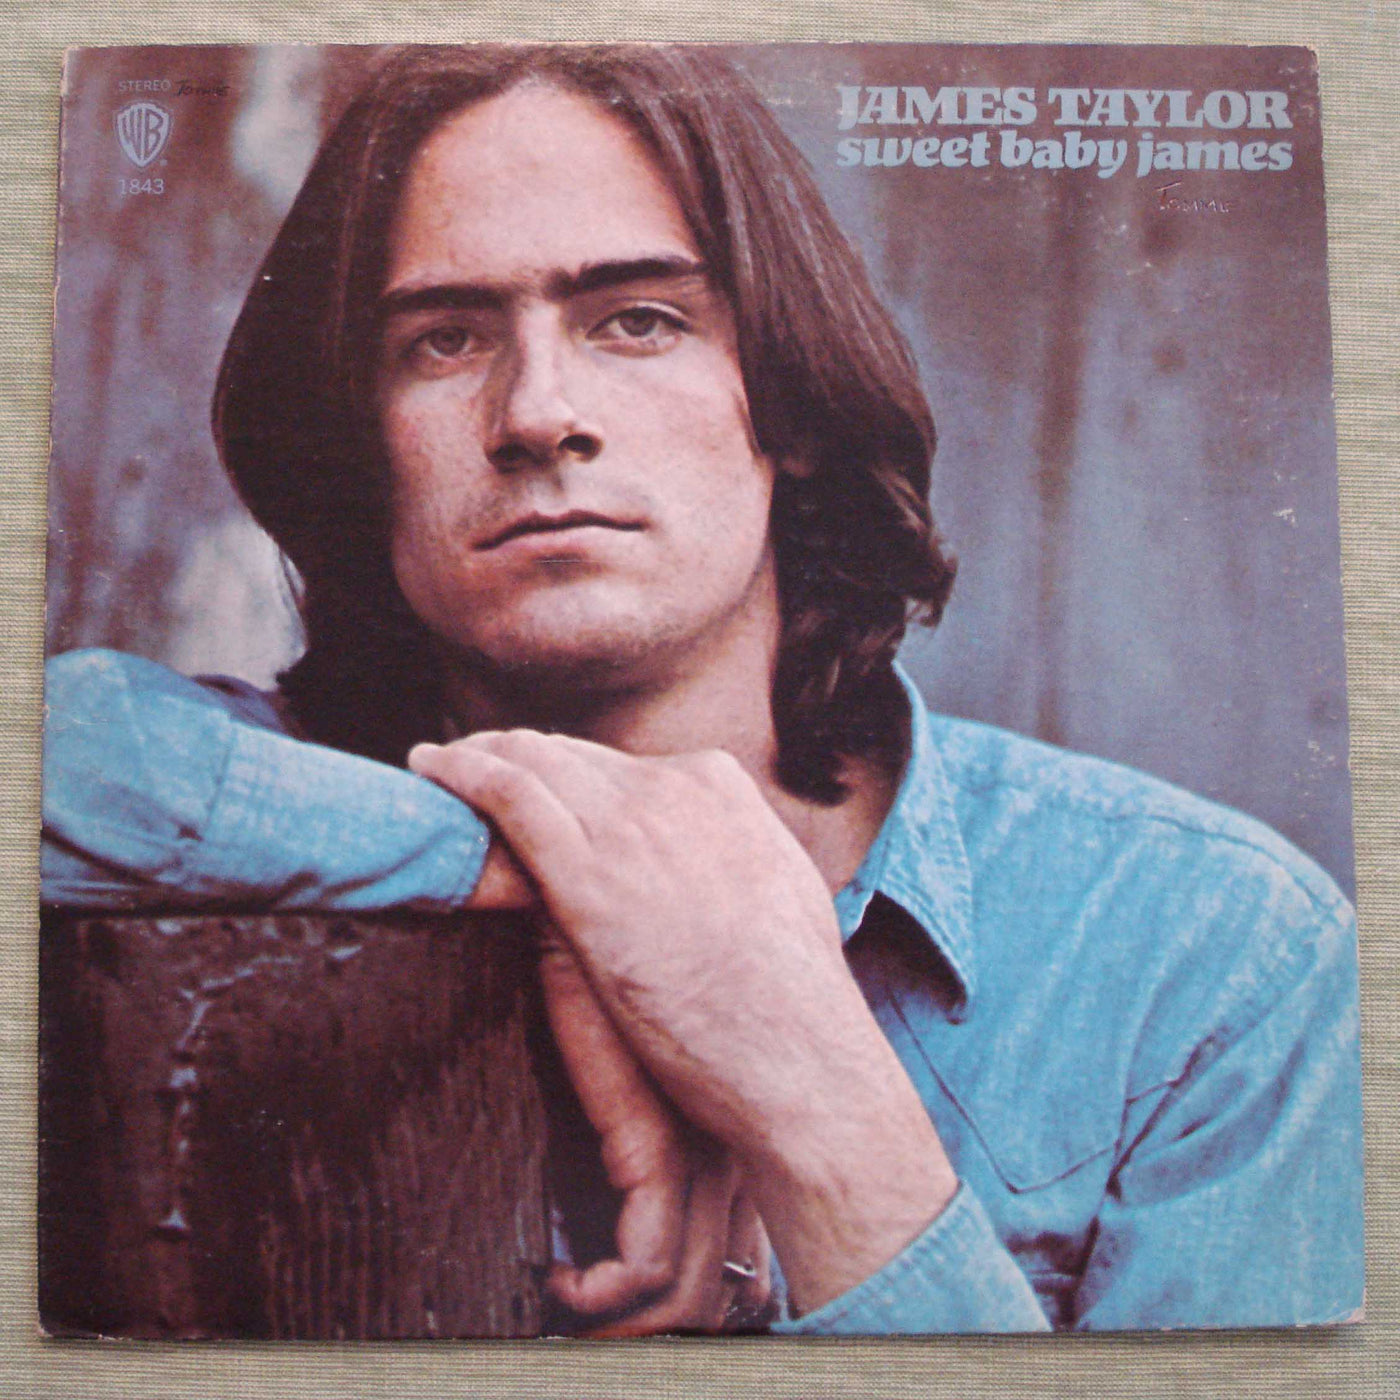 James Taylor - Sweet Baby James (1970) Vinyl LP 33rpm WS1843